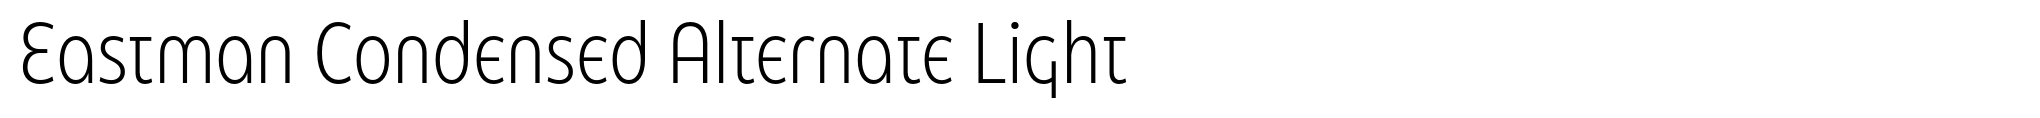 Eastman Condensed Alternate Light image